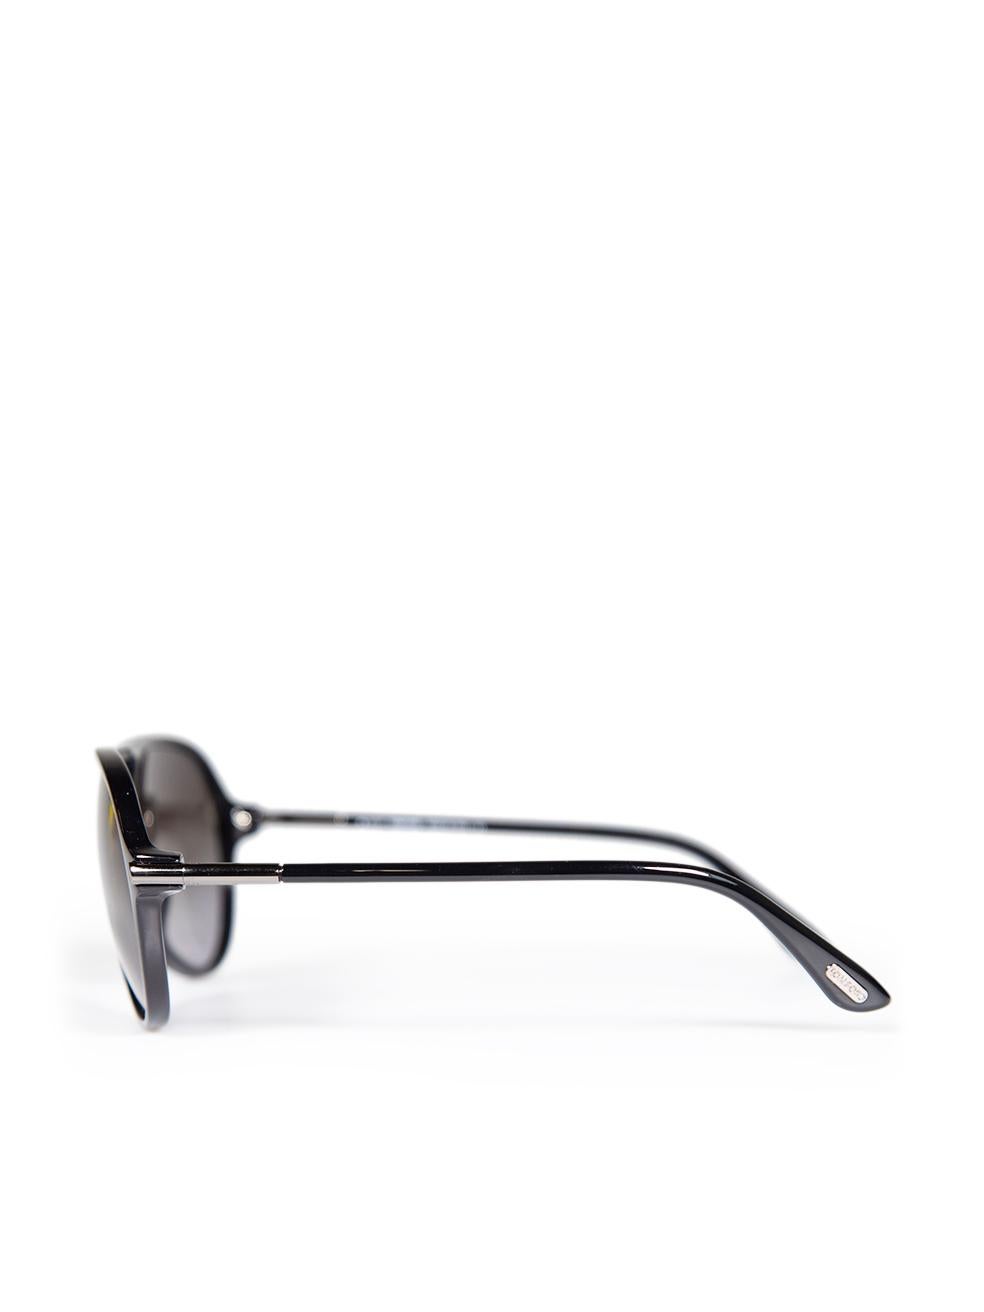 Tom Ford Shiny Black Leopold Sunglasses For Sale 1